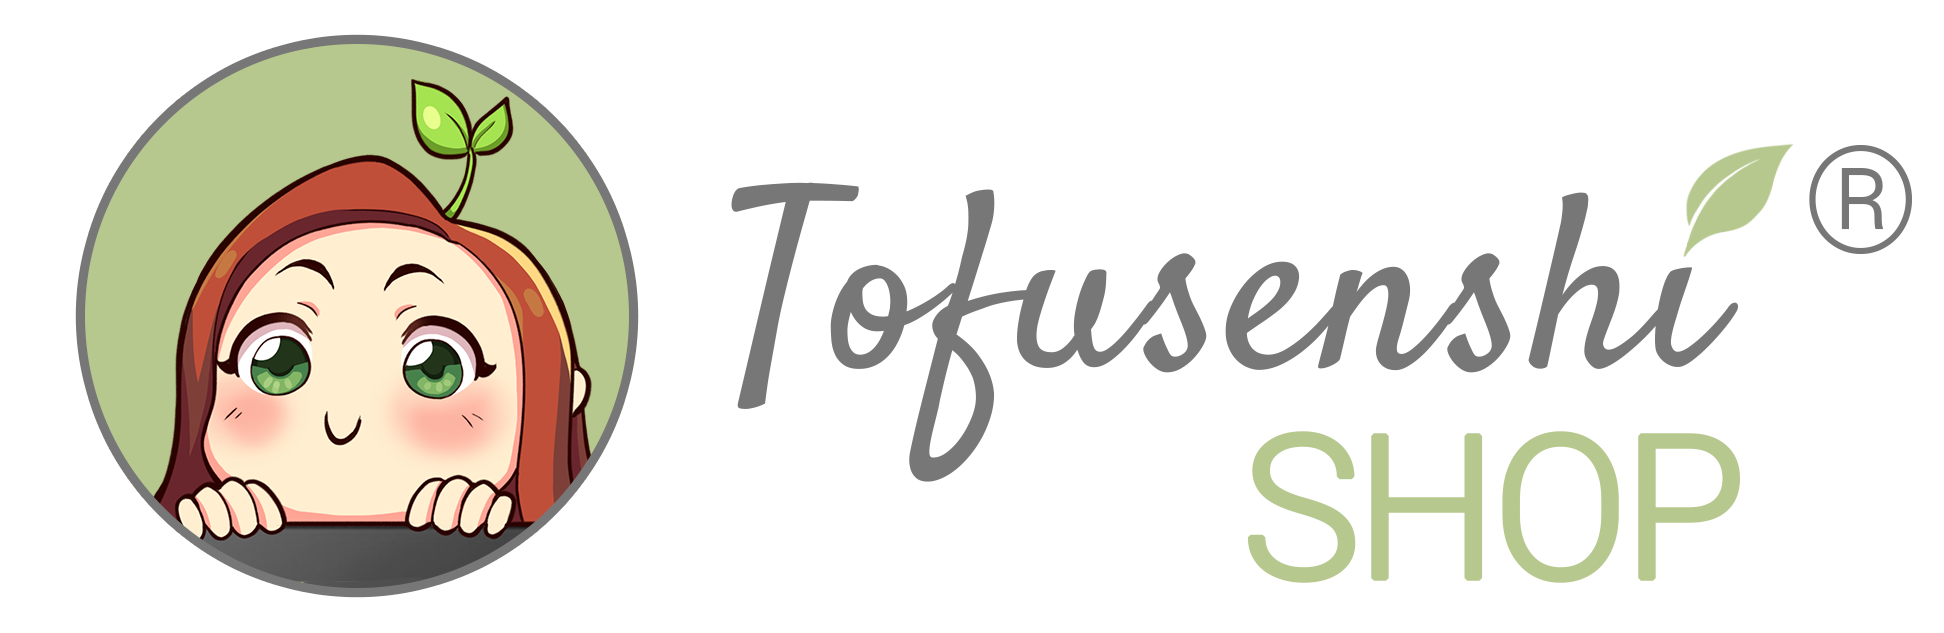 Tofusenshi